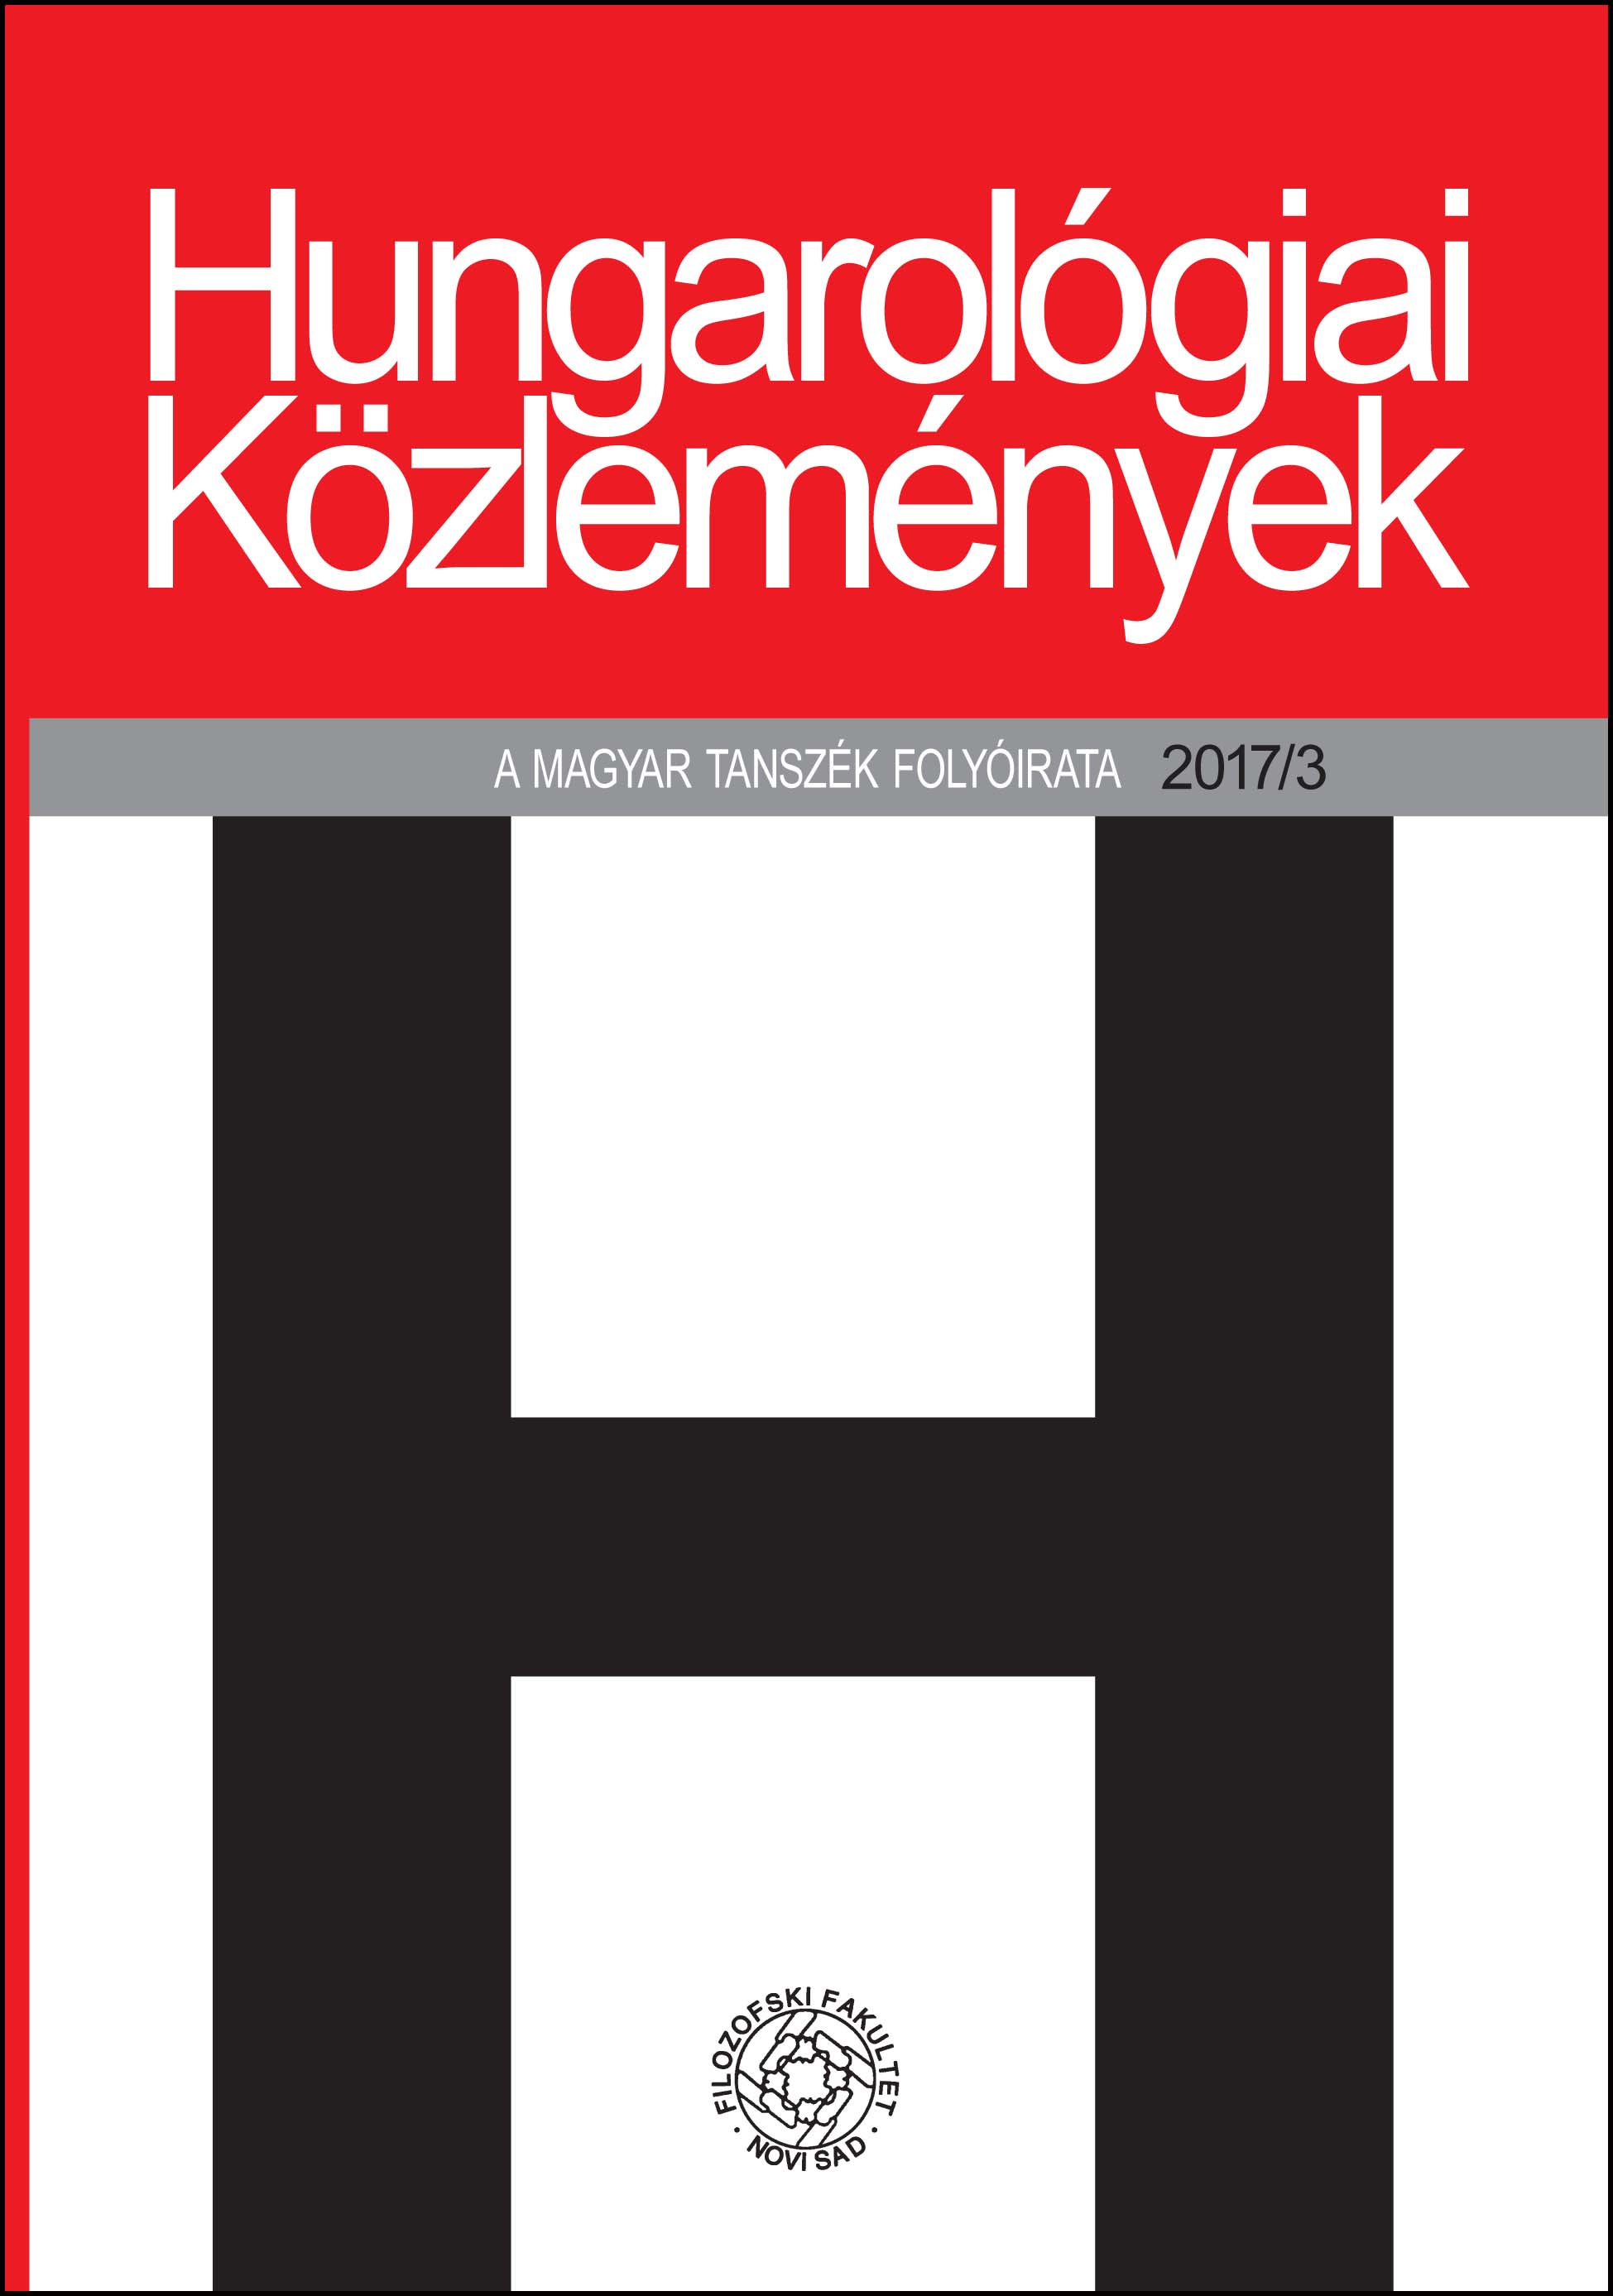 The Katalin Ladik Mirror Cover Image